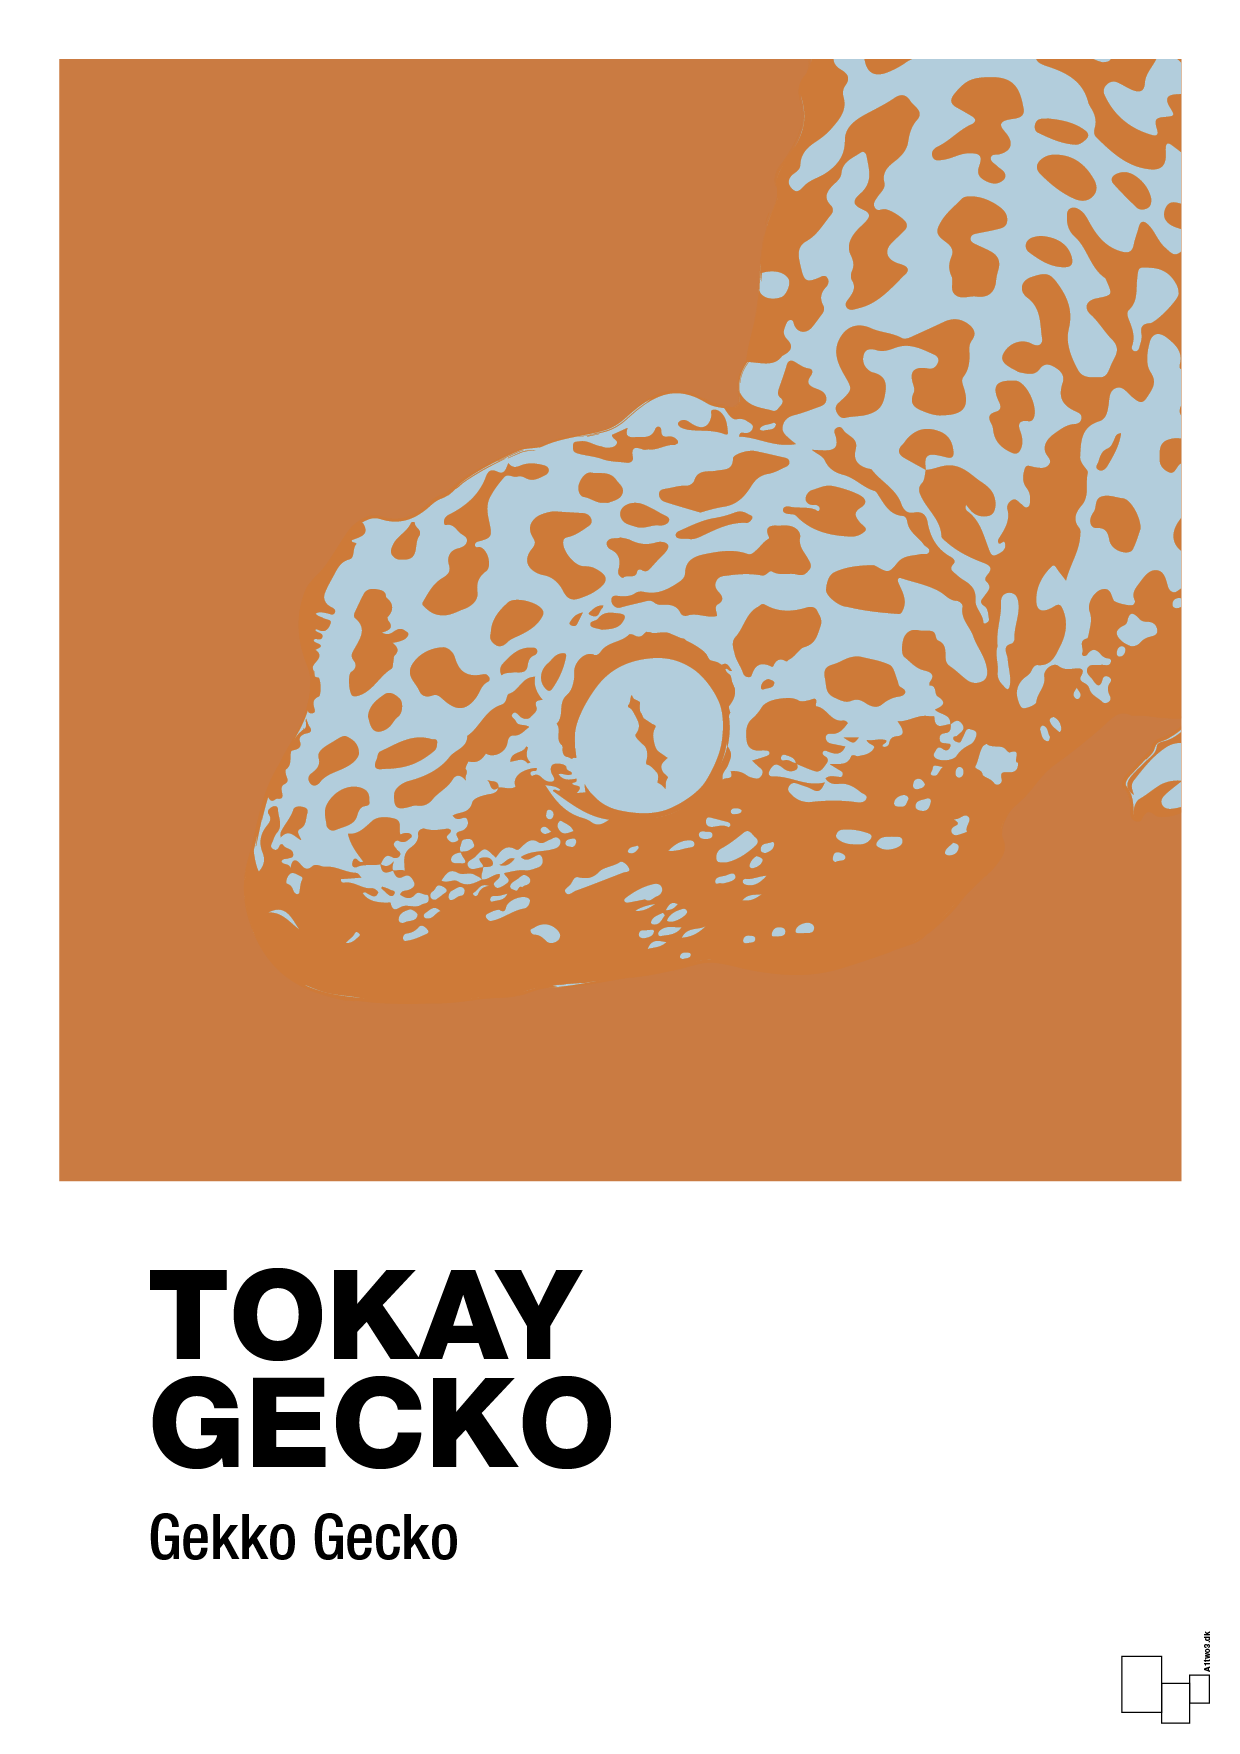 tokay gecko - Plakat med Videnskab i Rumba Orange